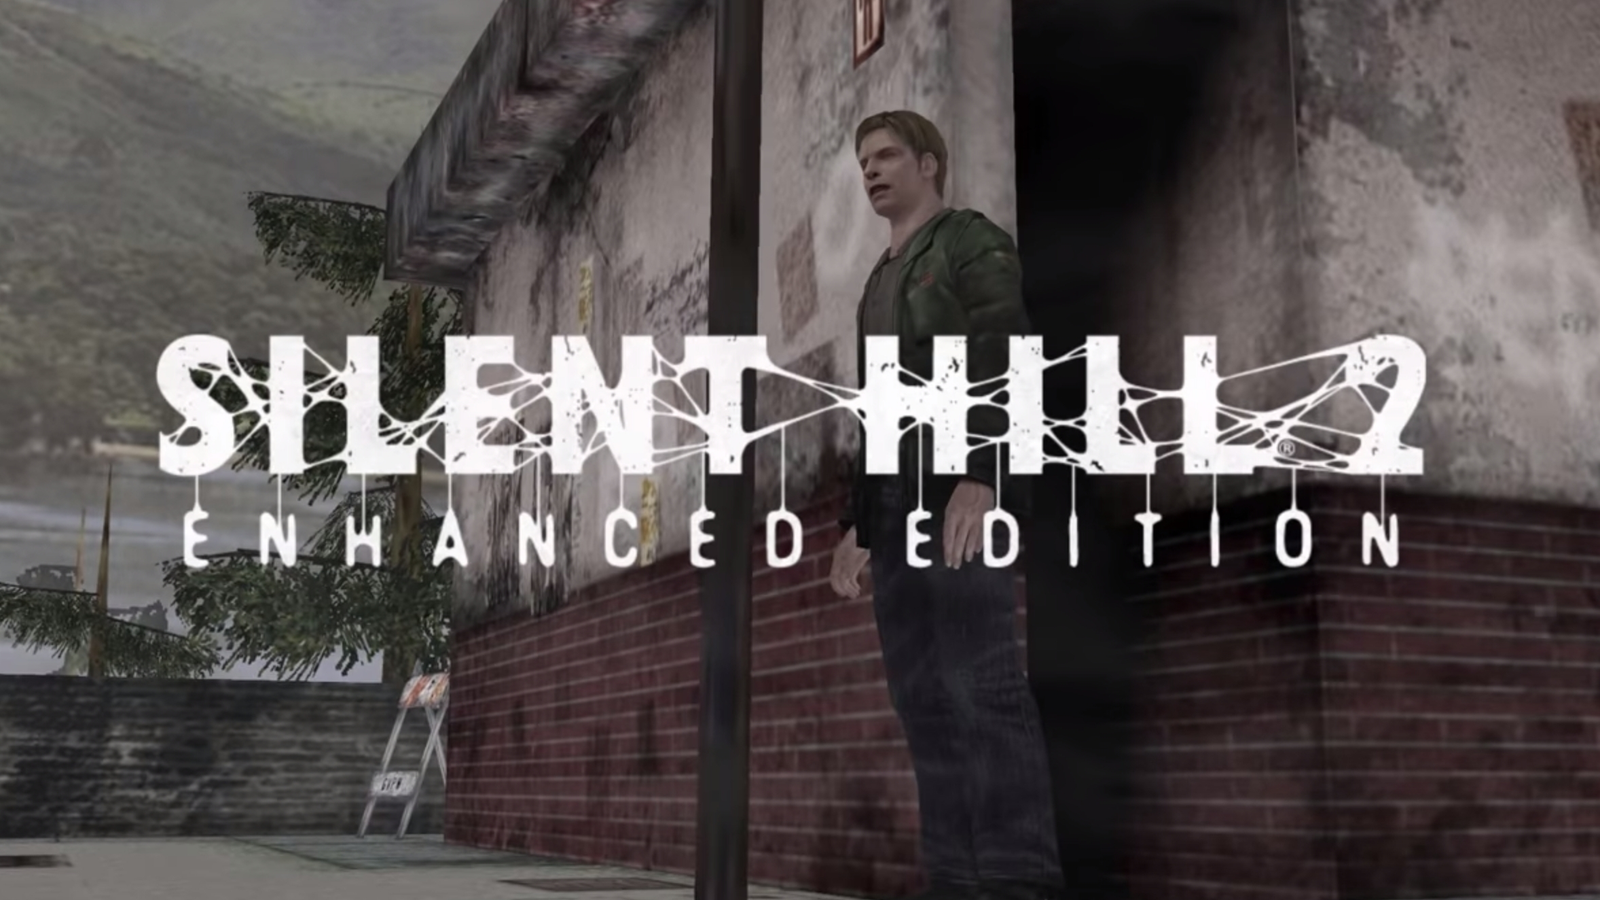 Silent Hill 2 Director's Cut PS2 Japan Konami Horror Game Action JP